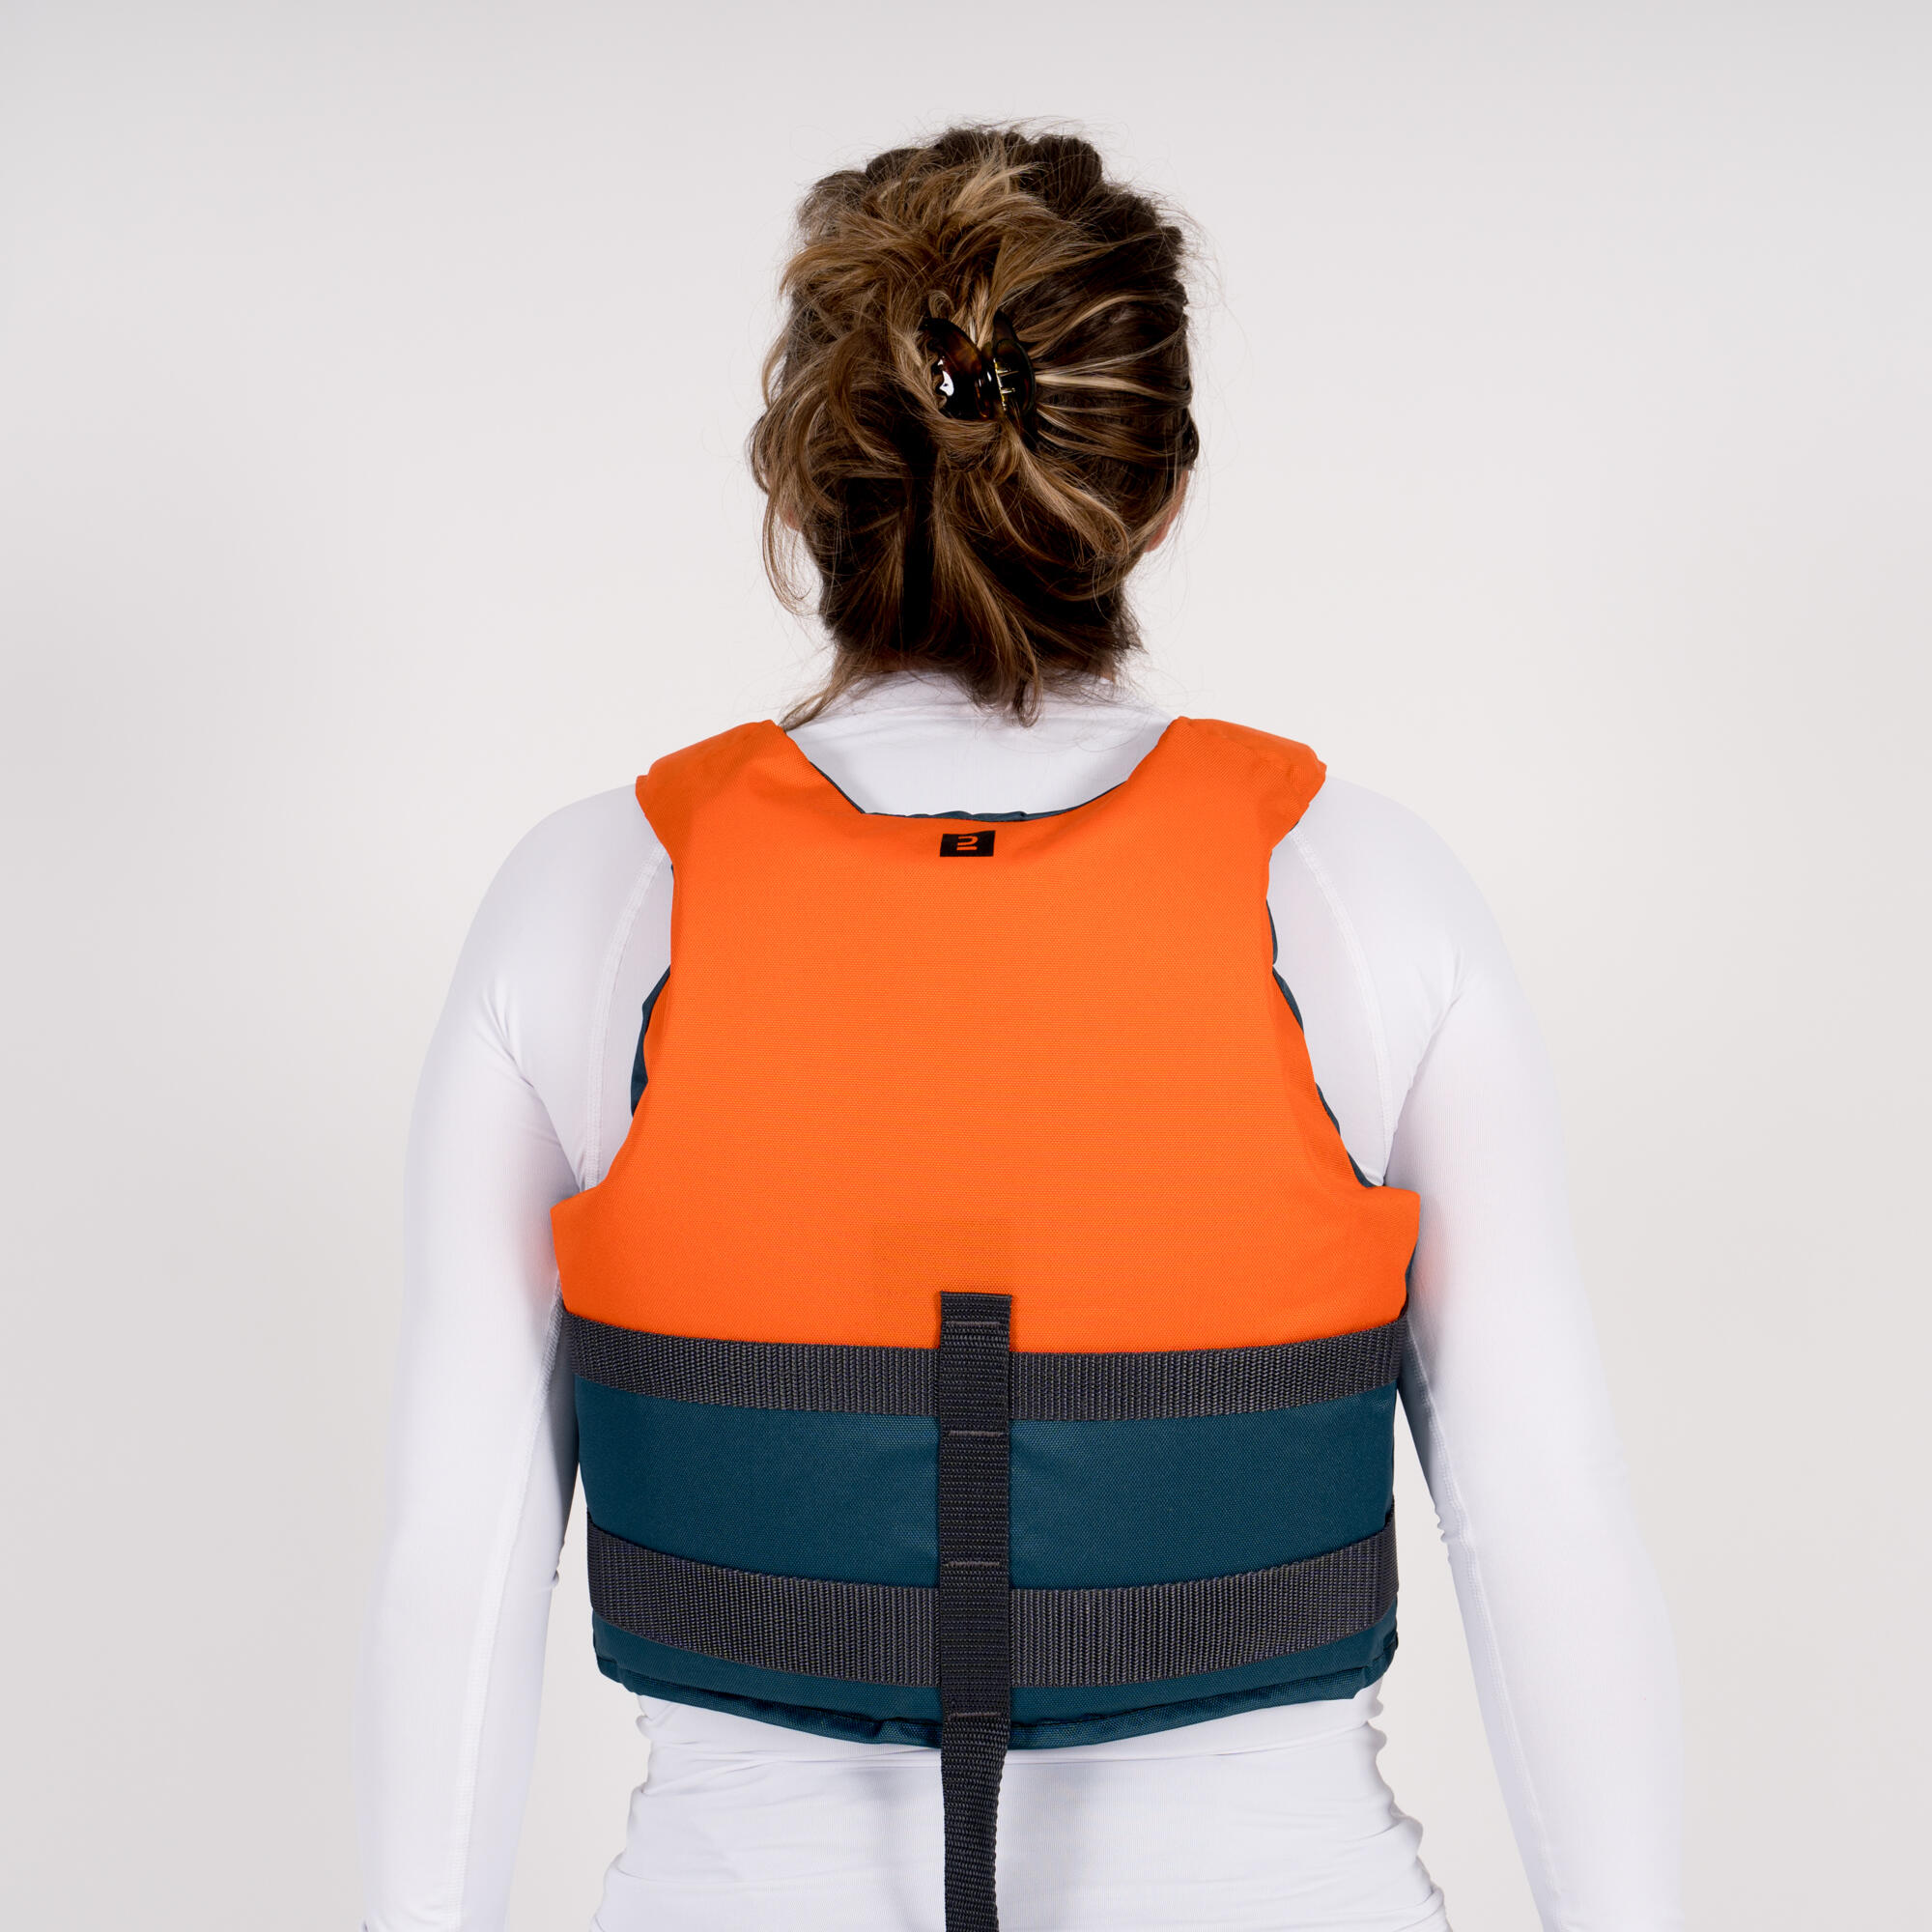 Life vest 50N+ Blue/Orange - Kayaks, SUPs, Dinghies 10/12